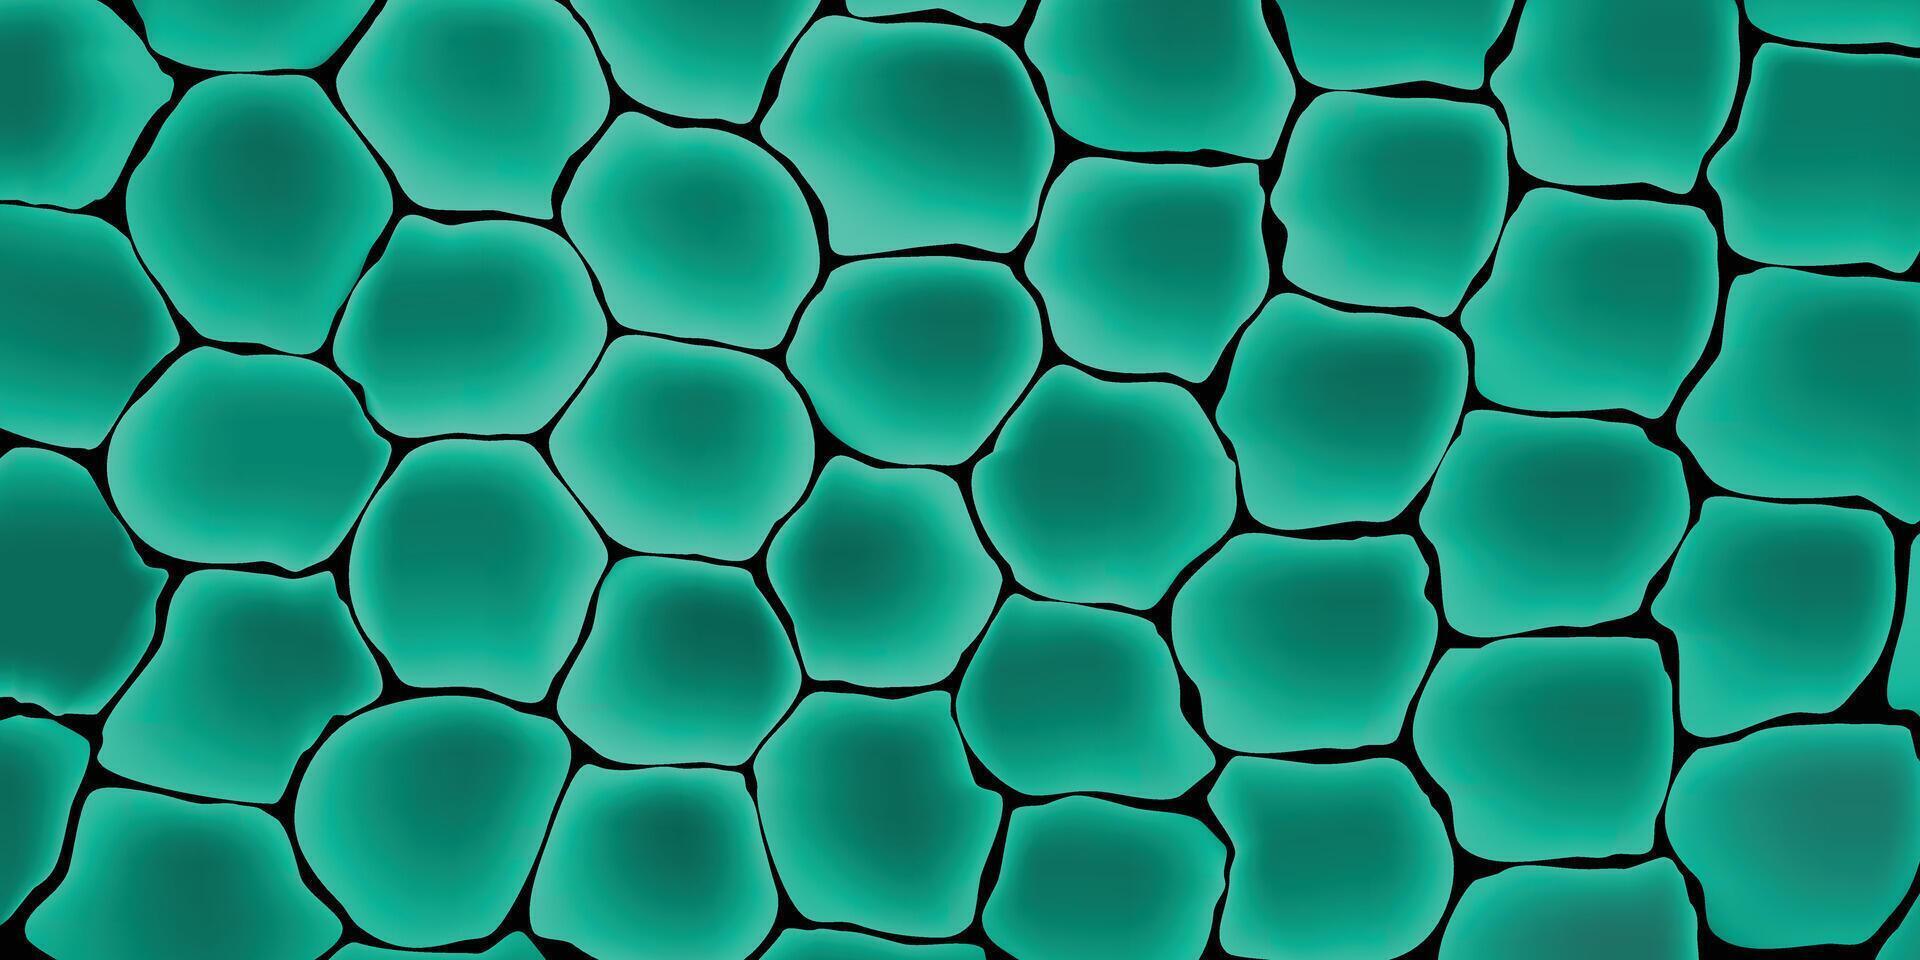 tile paving block green color vector for background design.